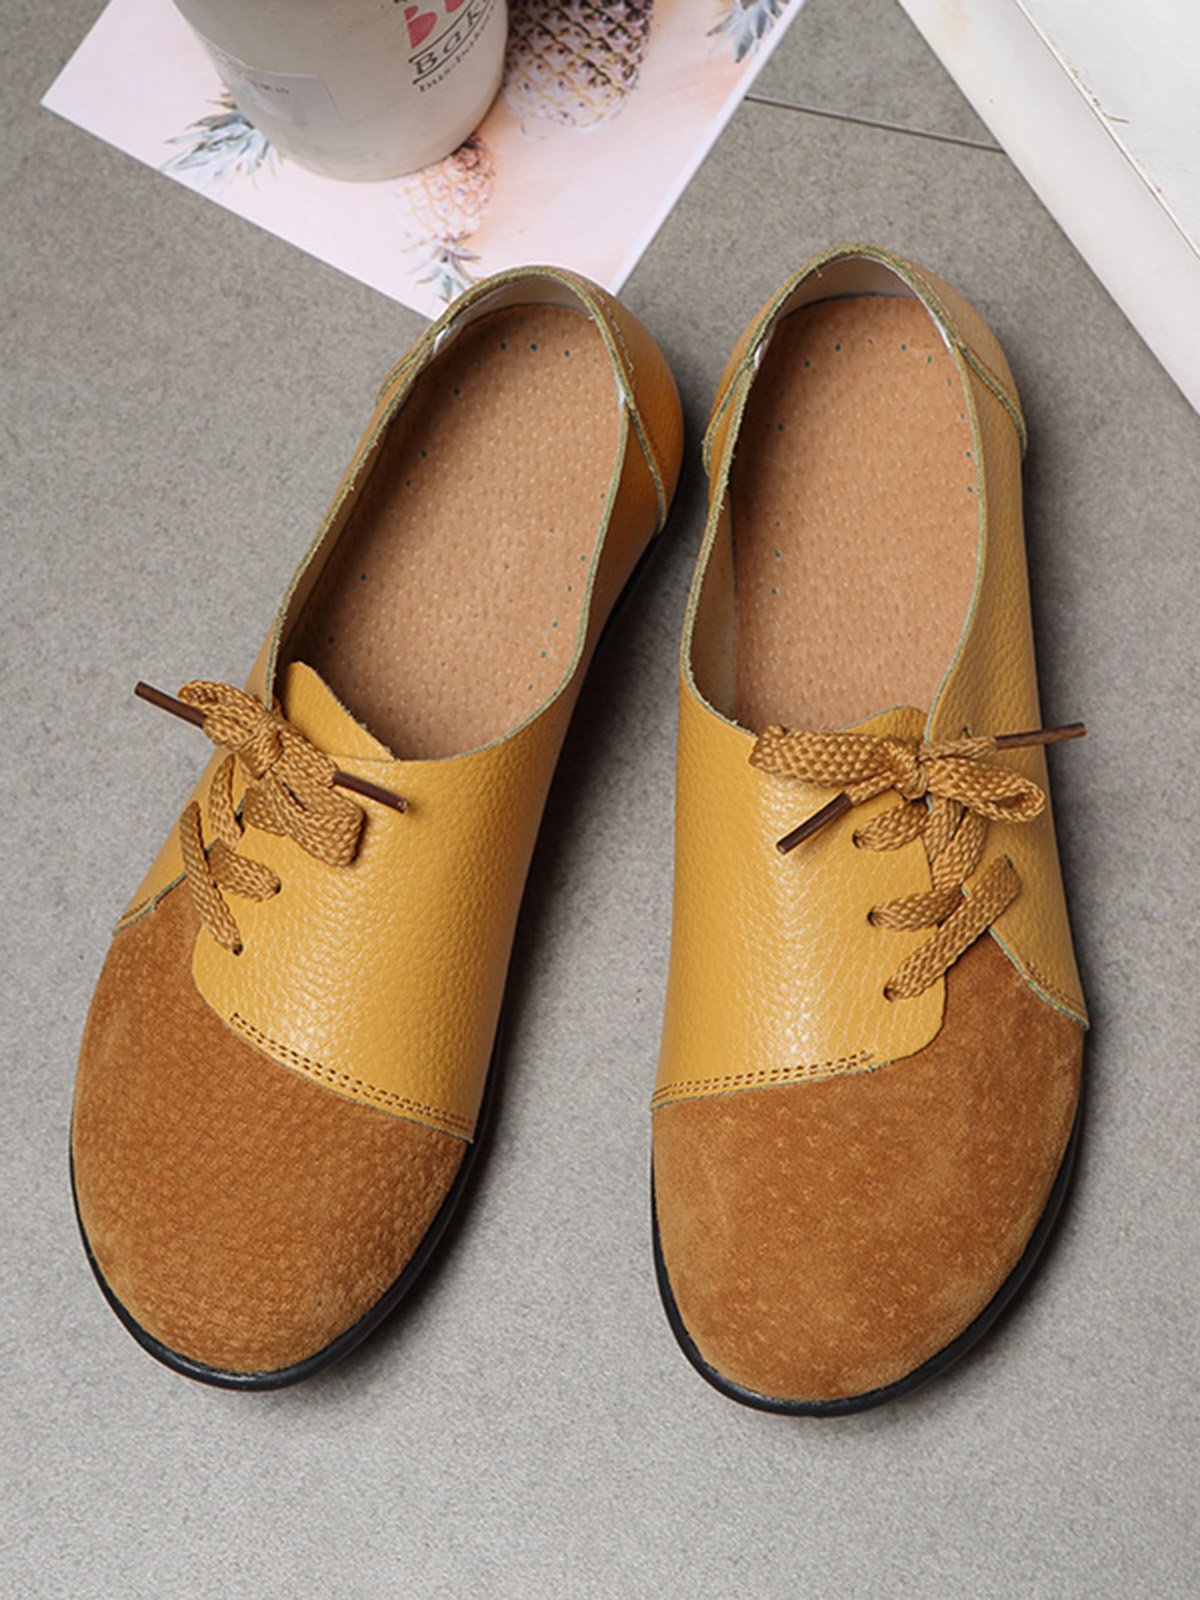 Pu Leather Flats/loafers